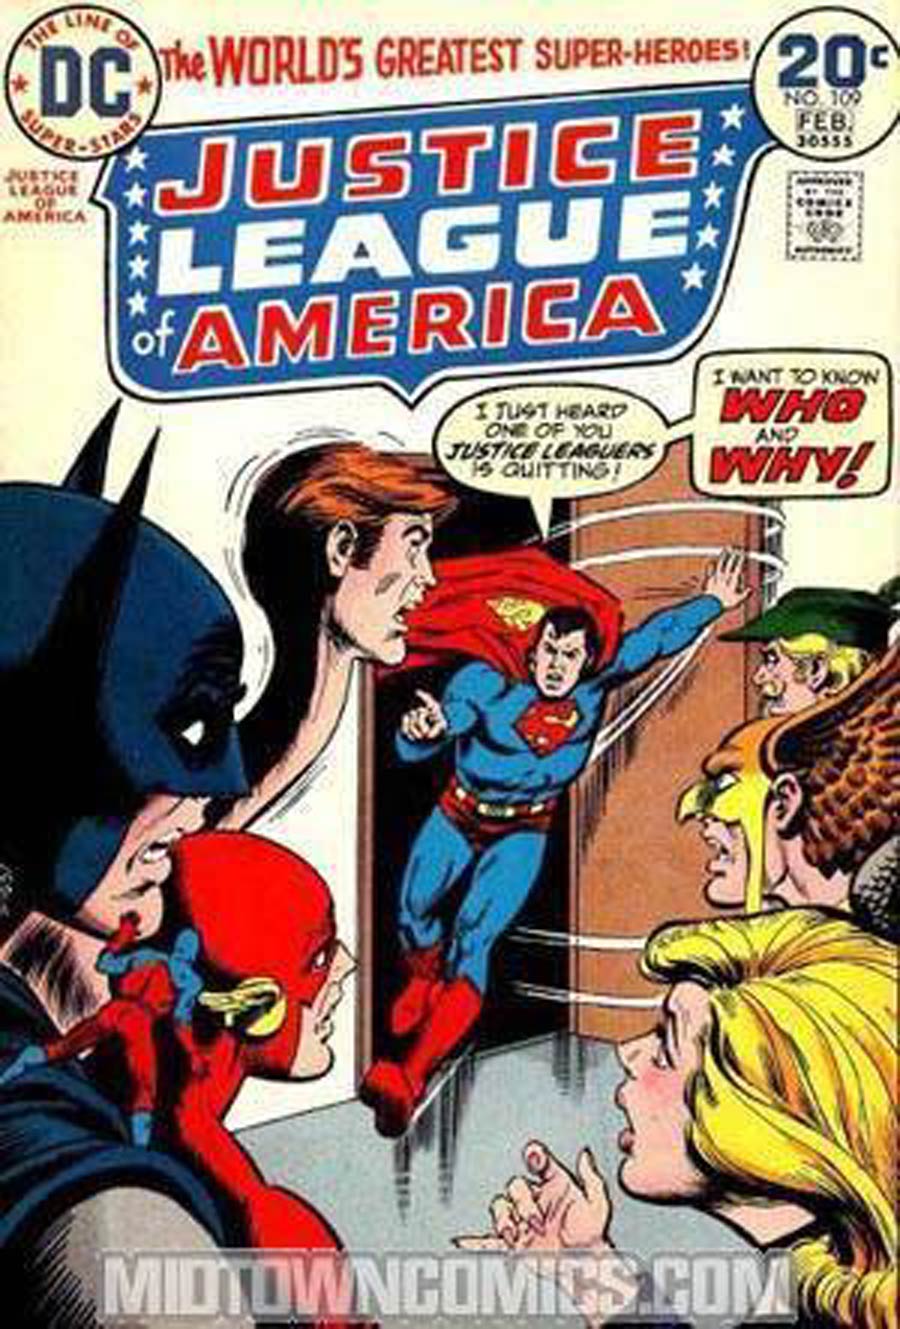 Justice League Of America #109